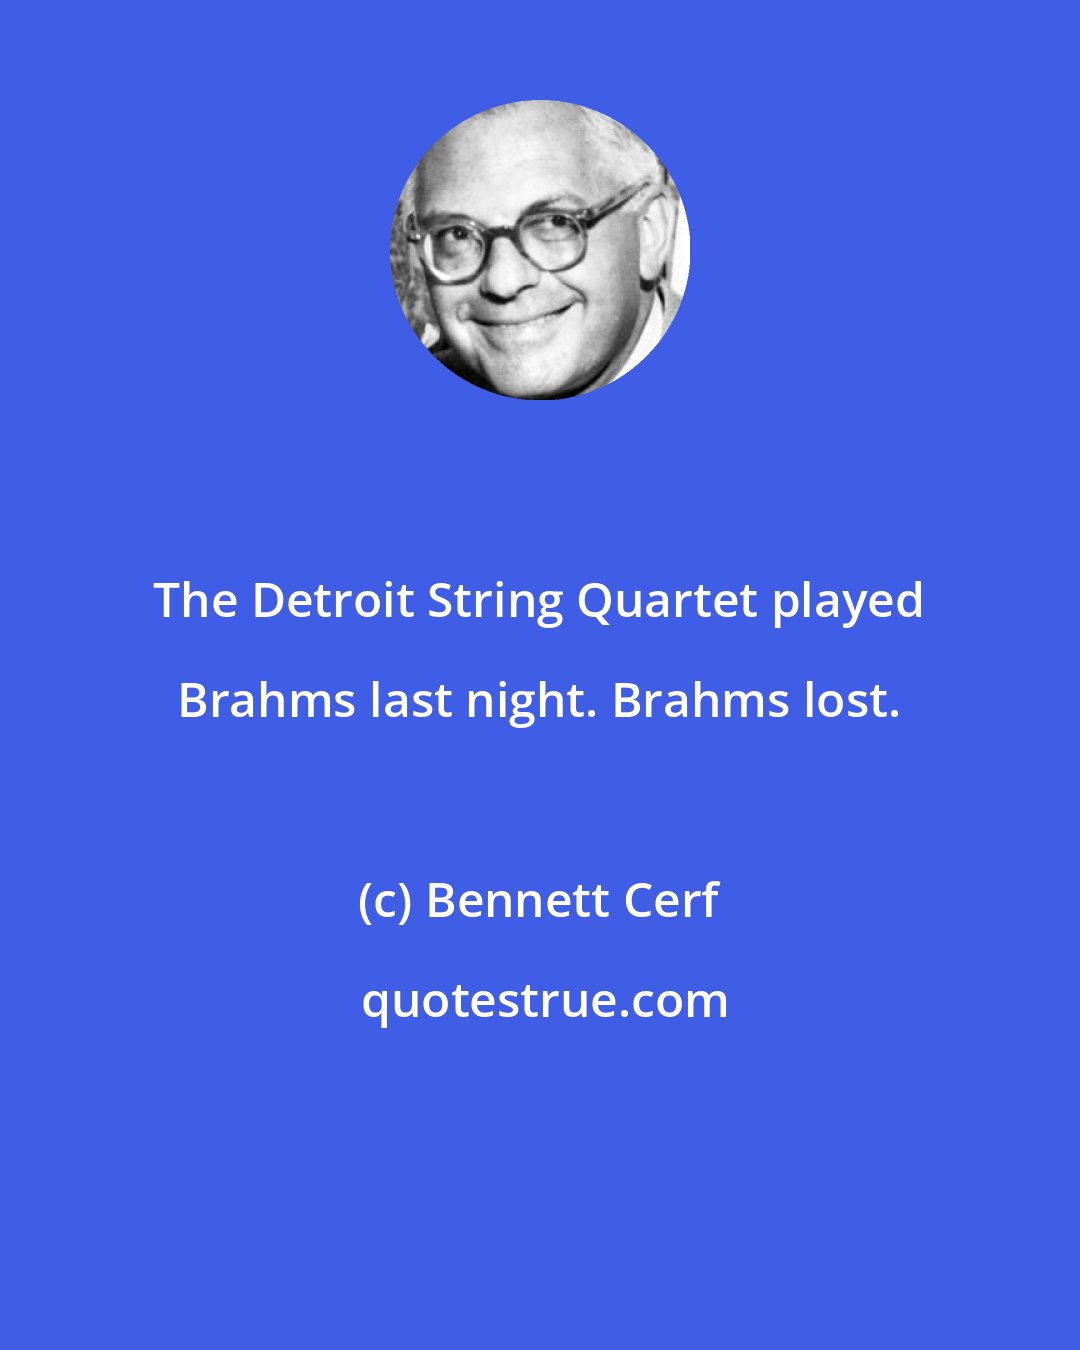 Bennett Cerf: The Detroit String Quartet played Brahms last night. Brahms lost.